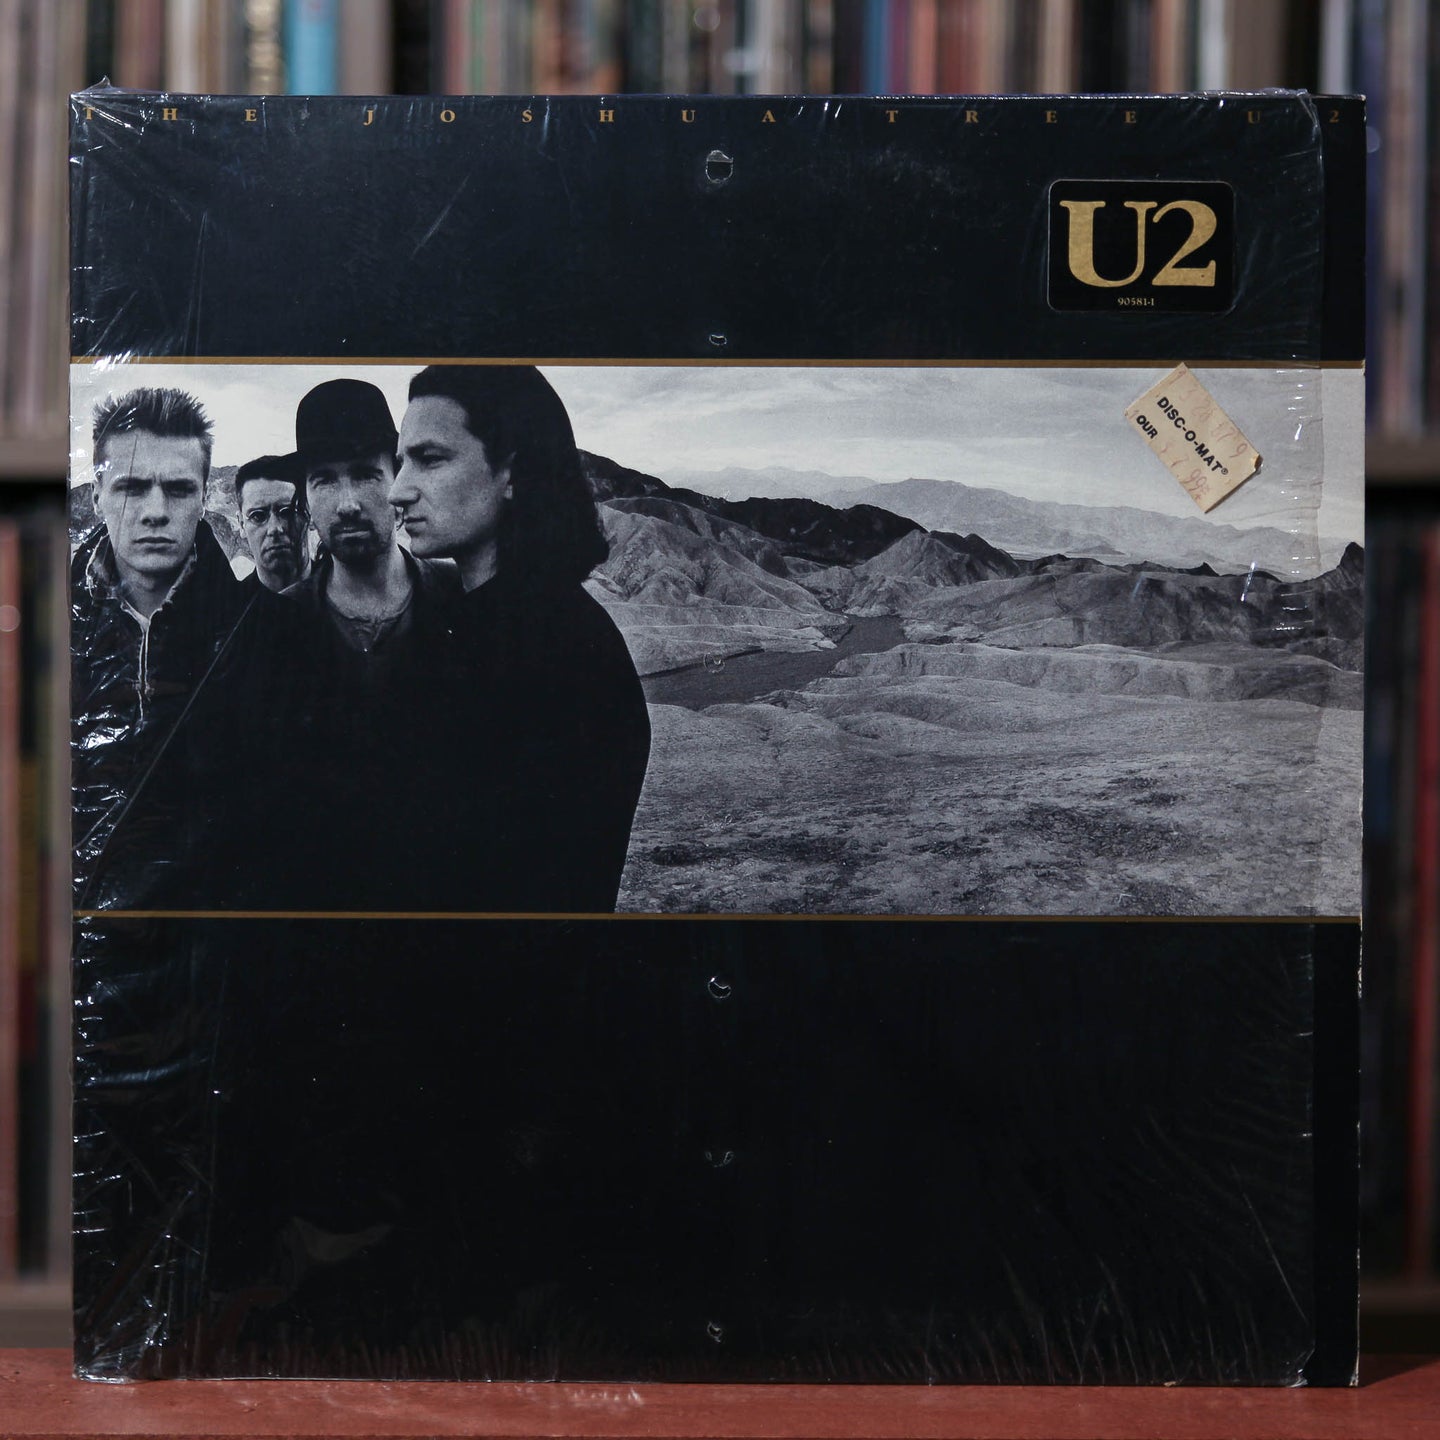 U2 - The Joshua Tree - 1987 Island